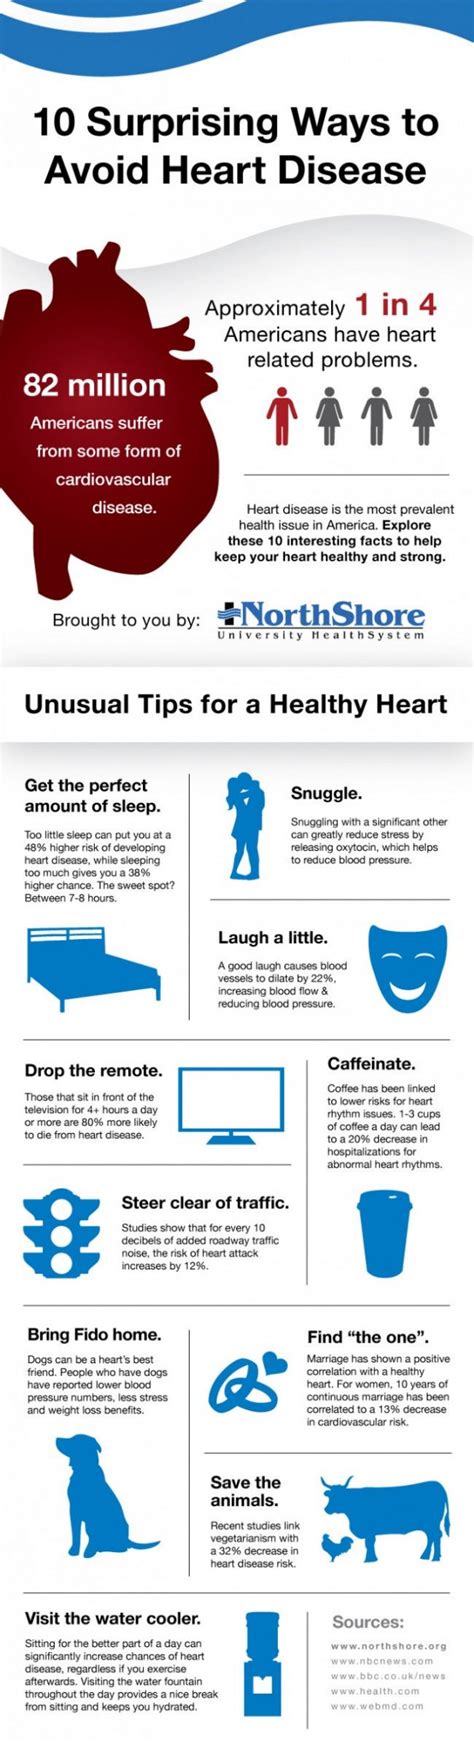 10 Unique Ways To Avoid Heart Disease Dr Sam Robbins